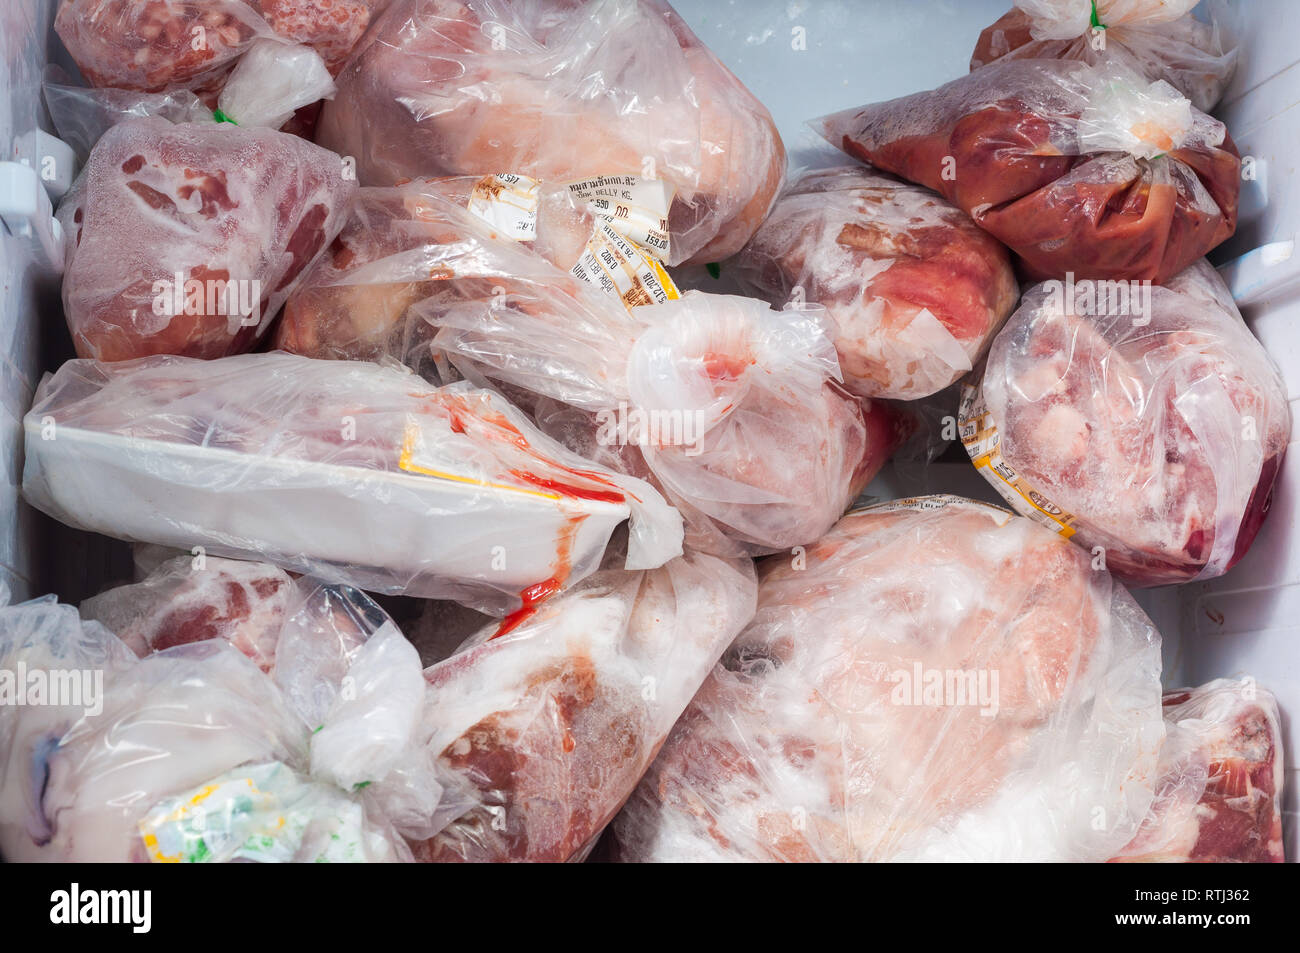 Freezer Full Meat Stock Photos - 1,266 Images